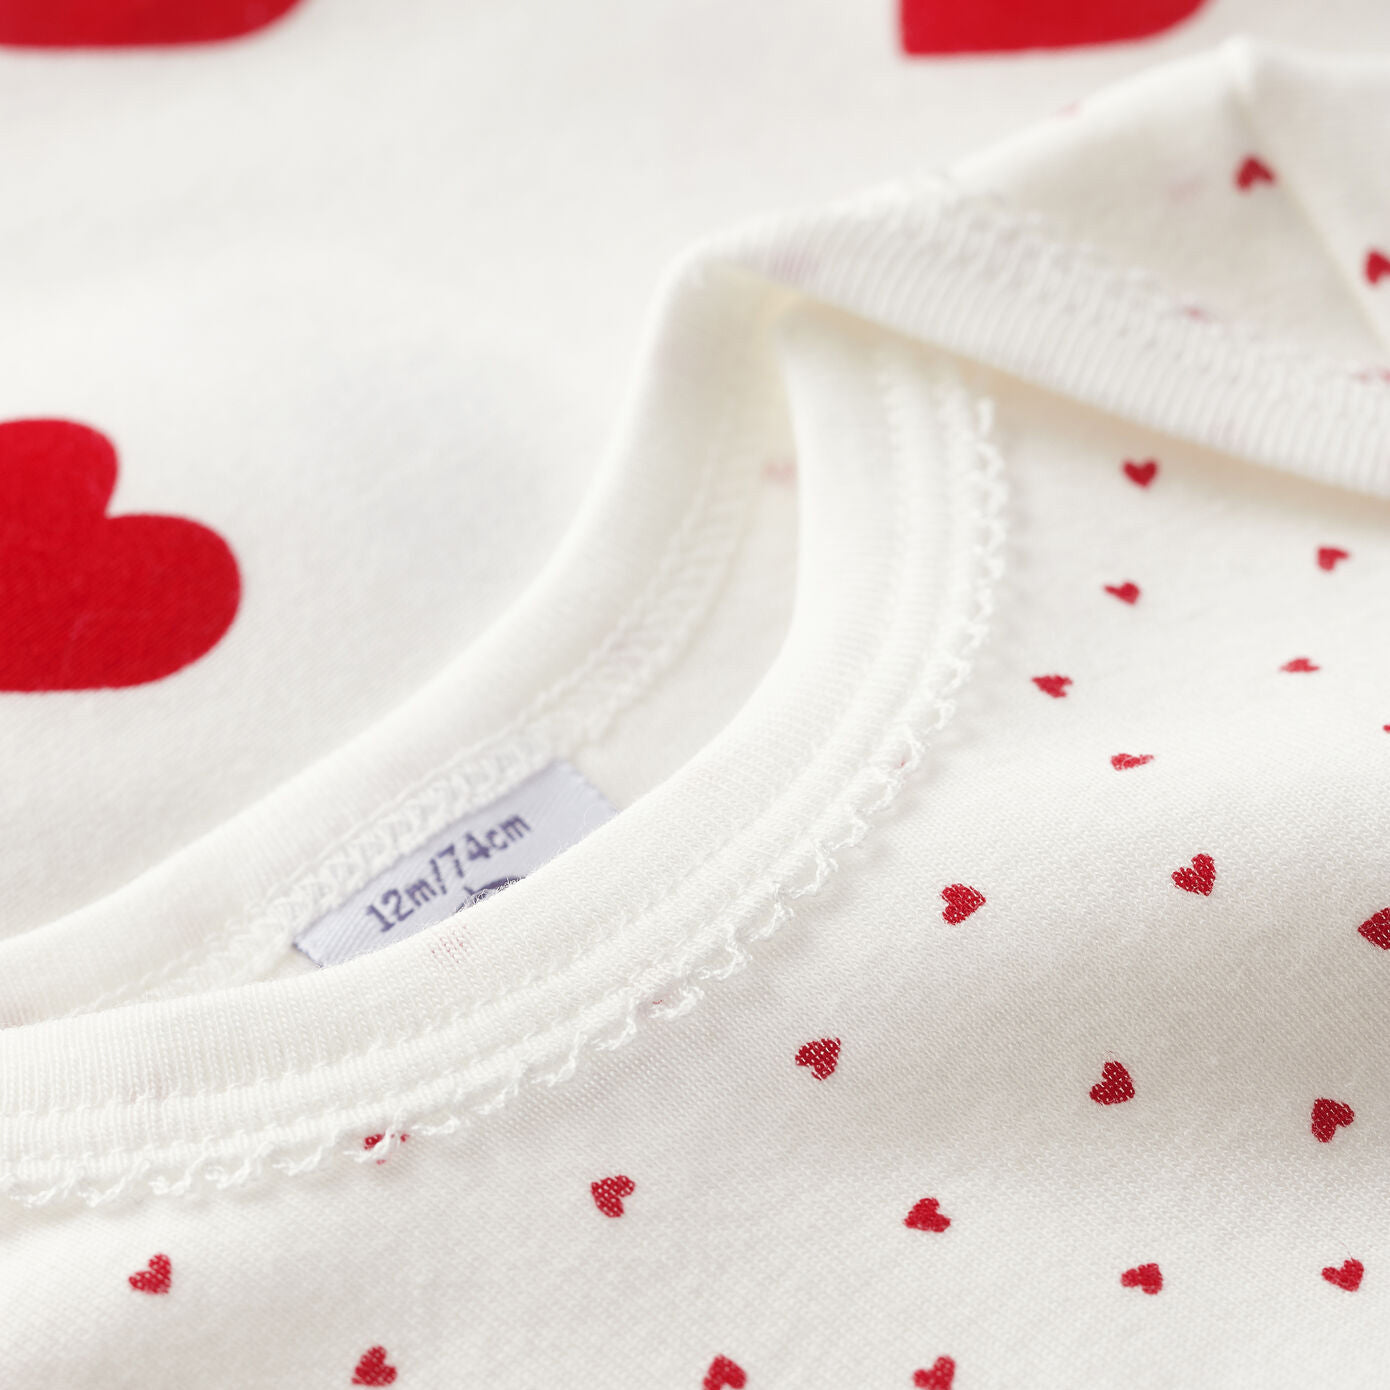 Baby Girls White Heart Cotton Babysuit Set(3 Pack)